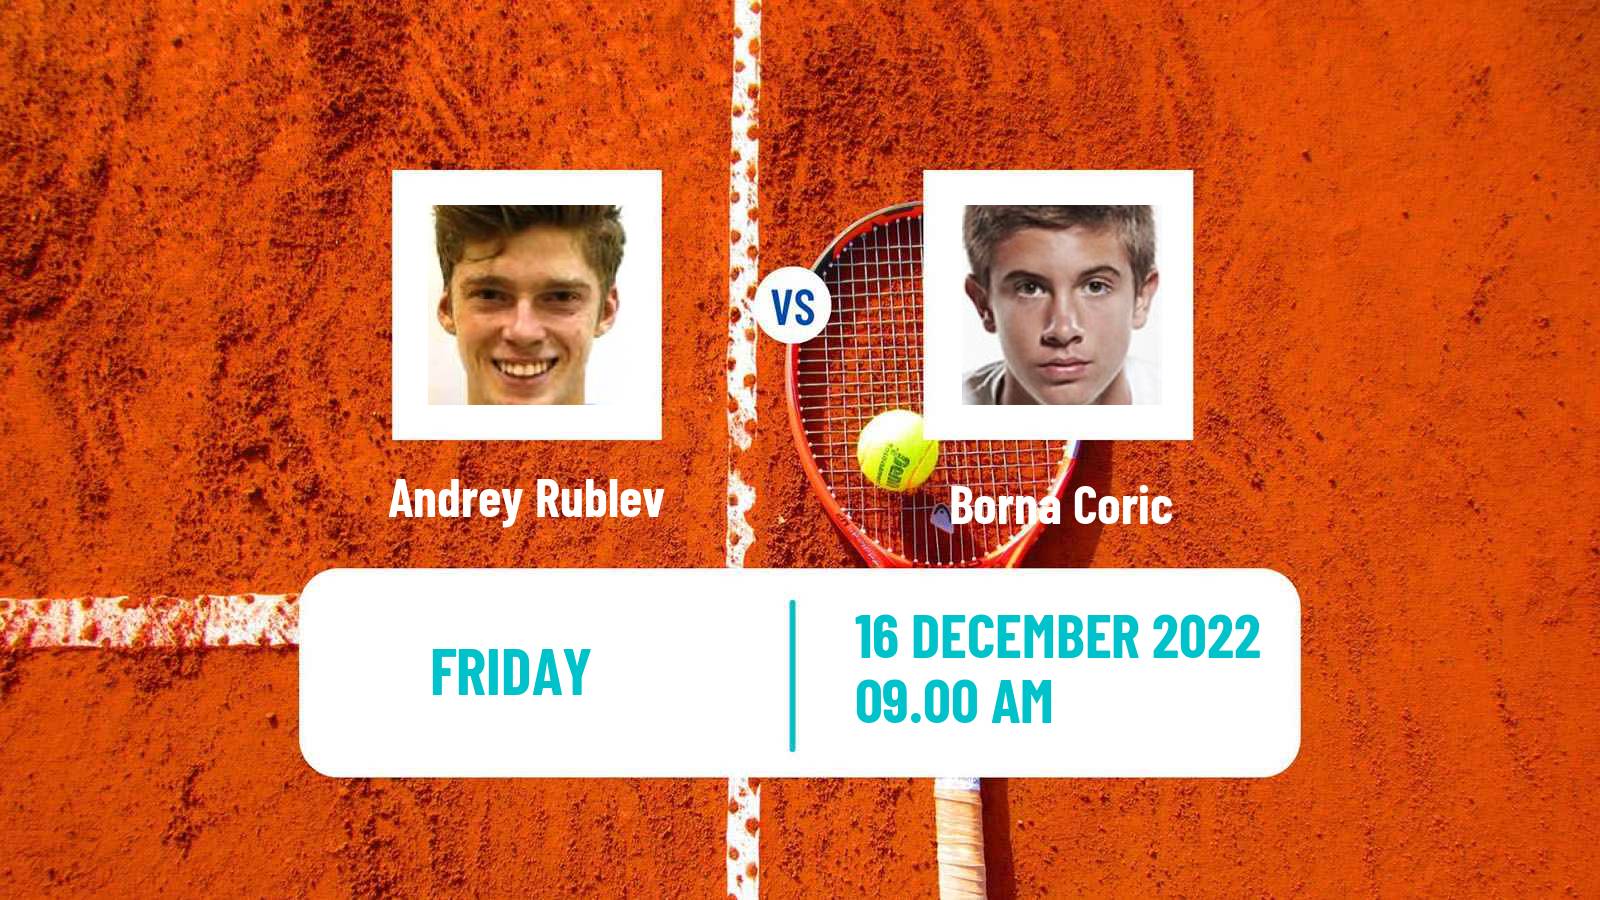 Tennis Exhibition World Tennis Championship Andrey Rublev - Borna Coric